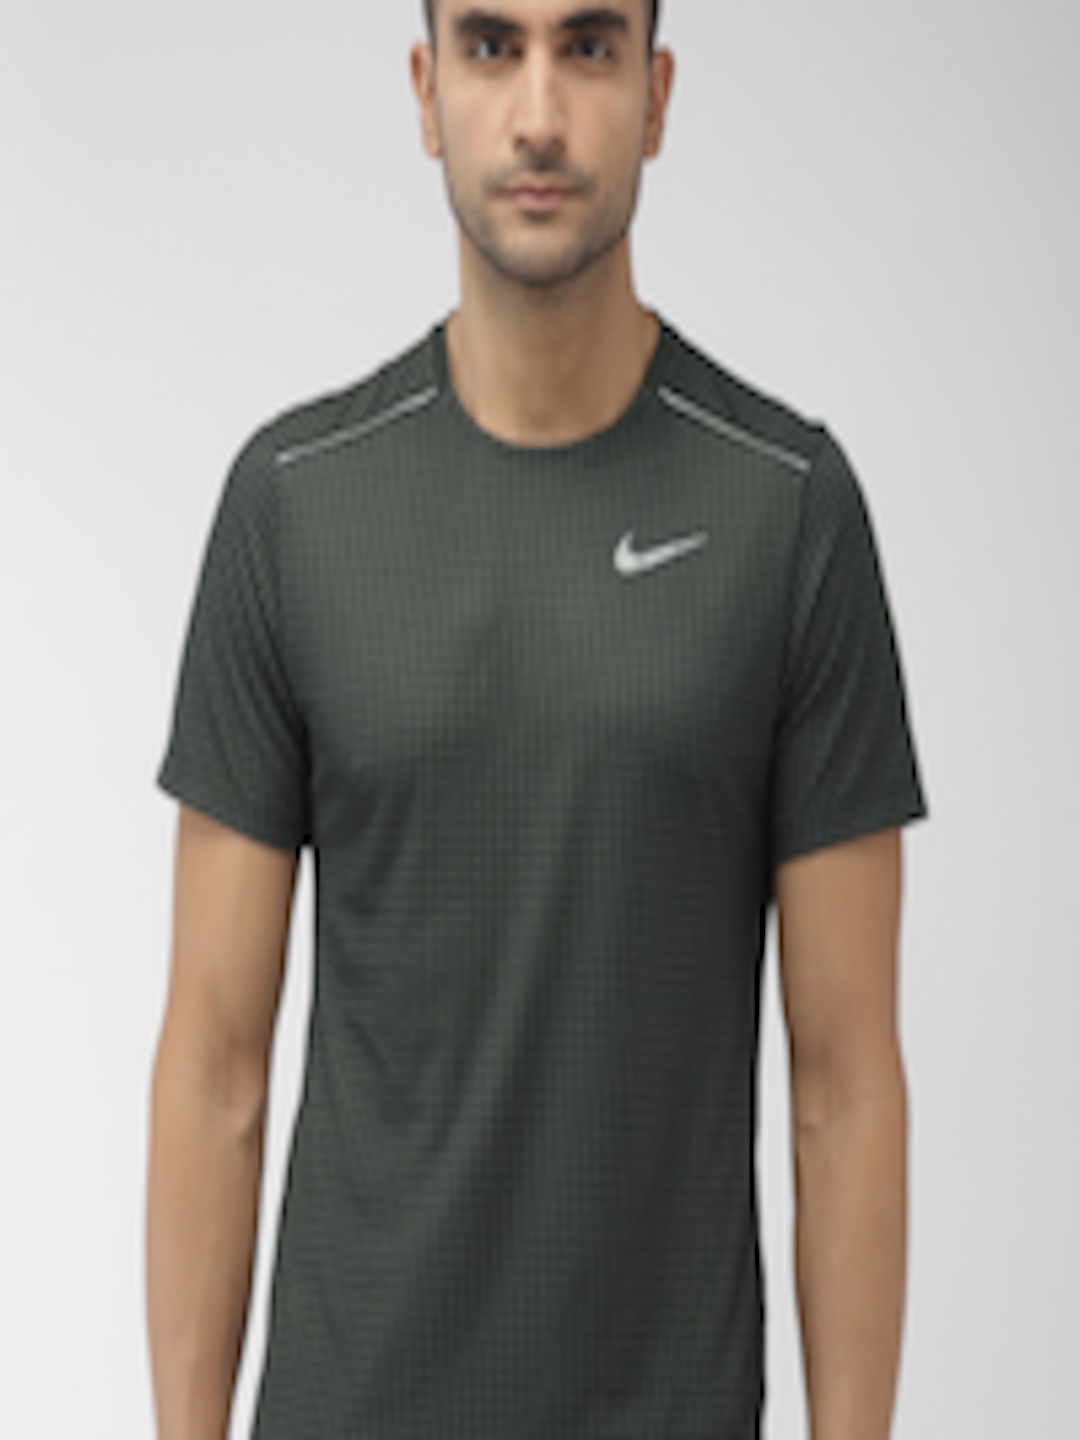 Buy Nike Men Grey & Black Checked Standard Fit Miler Tech DRI FIT T ...